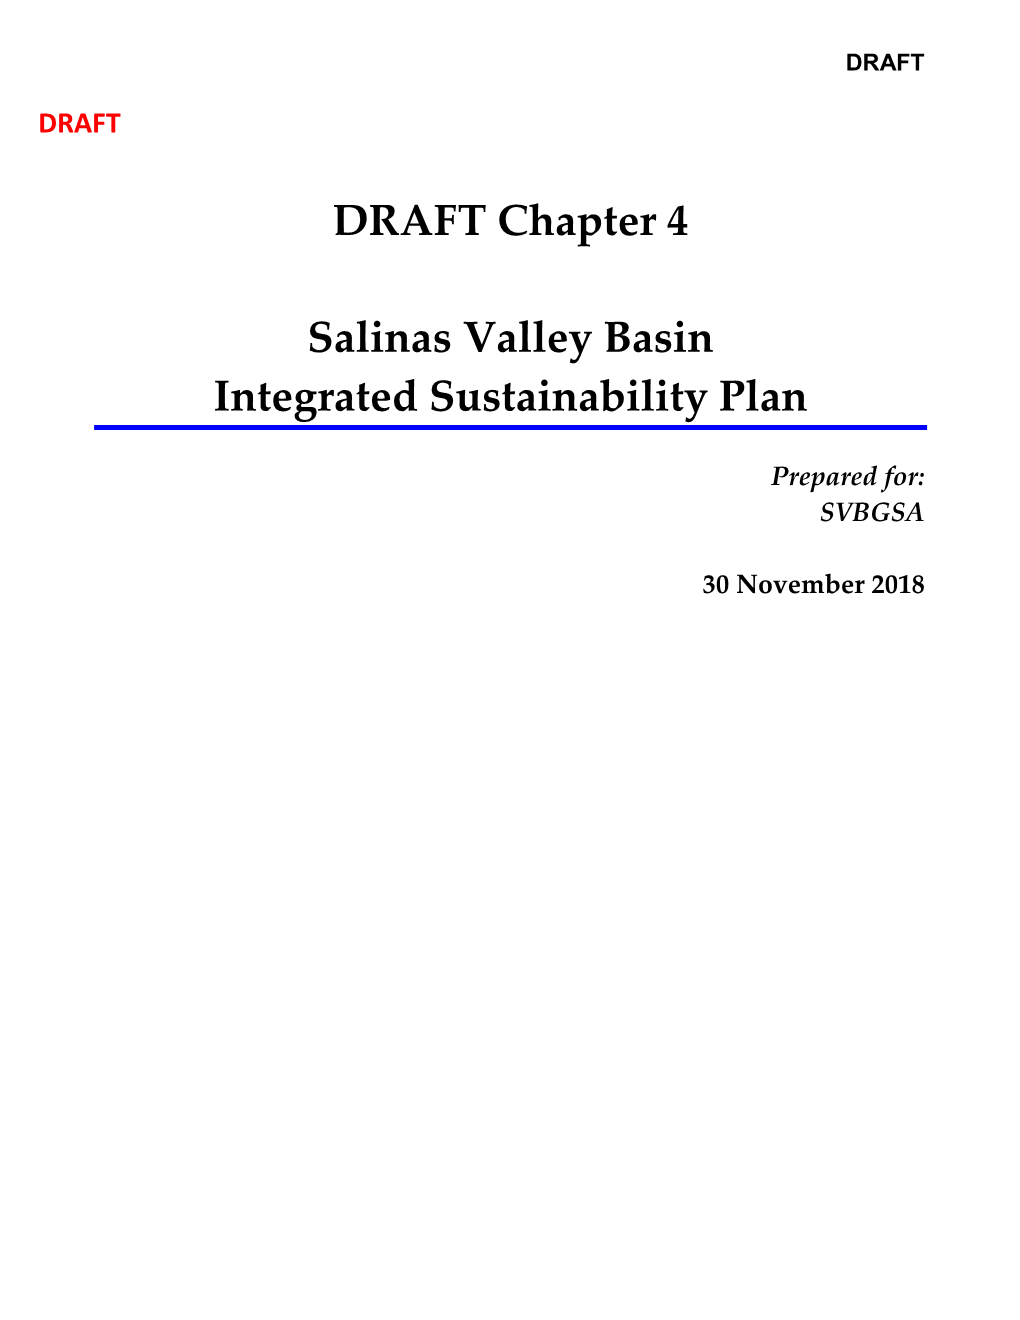 Salinas Valley Basin Integrated Sustainability Plan